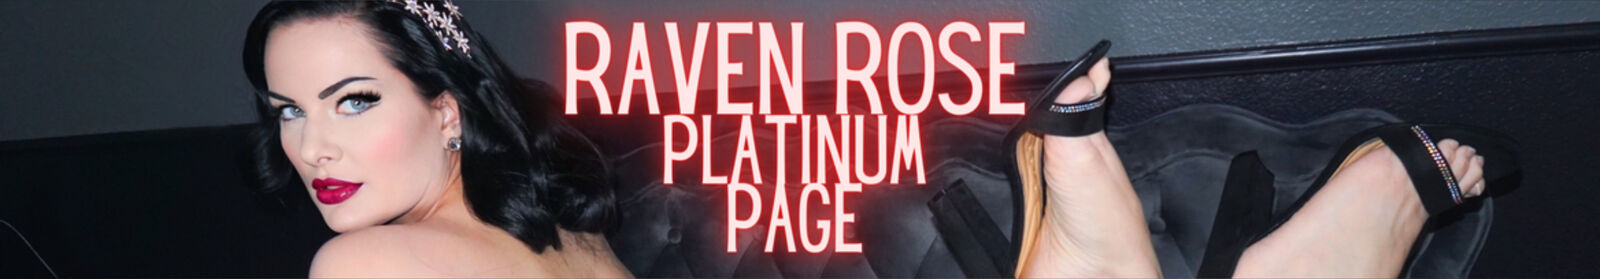 See RAVEN ROSE PLATINUM PAGE profile